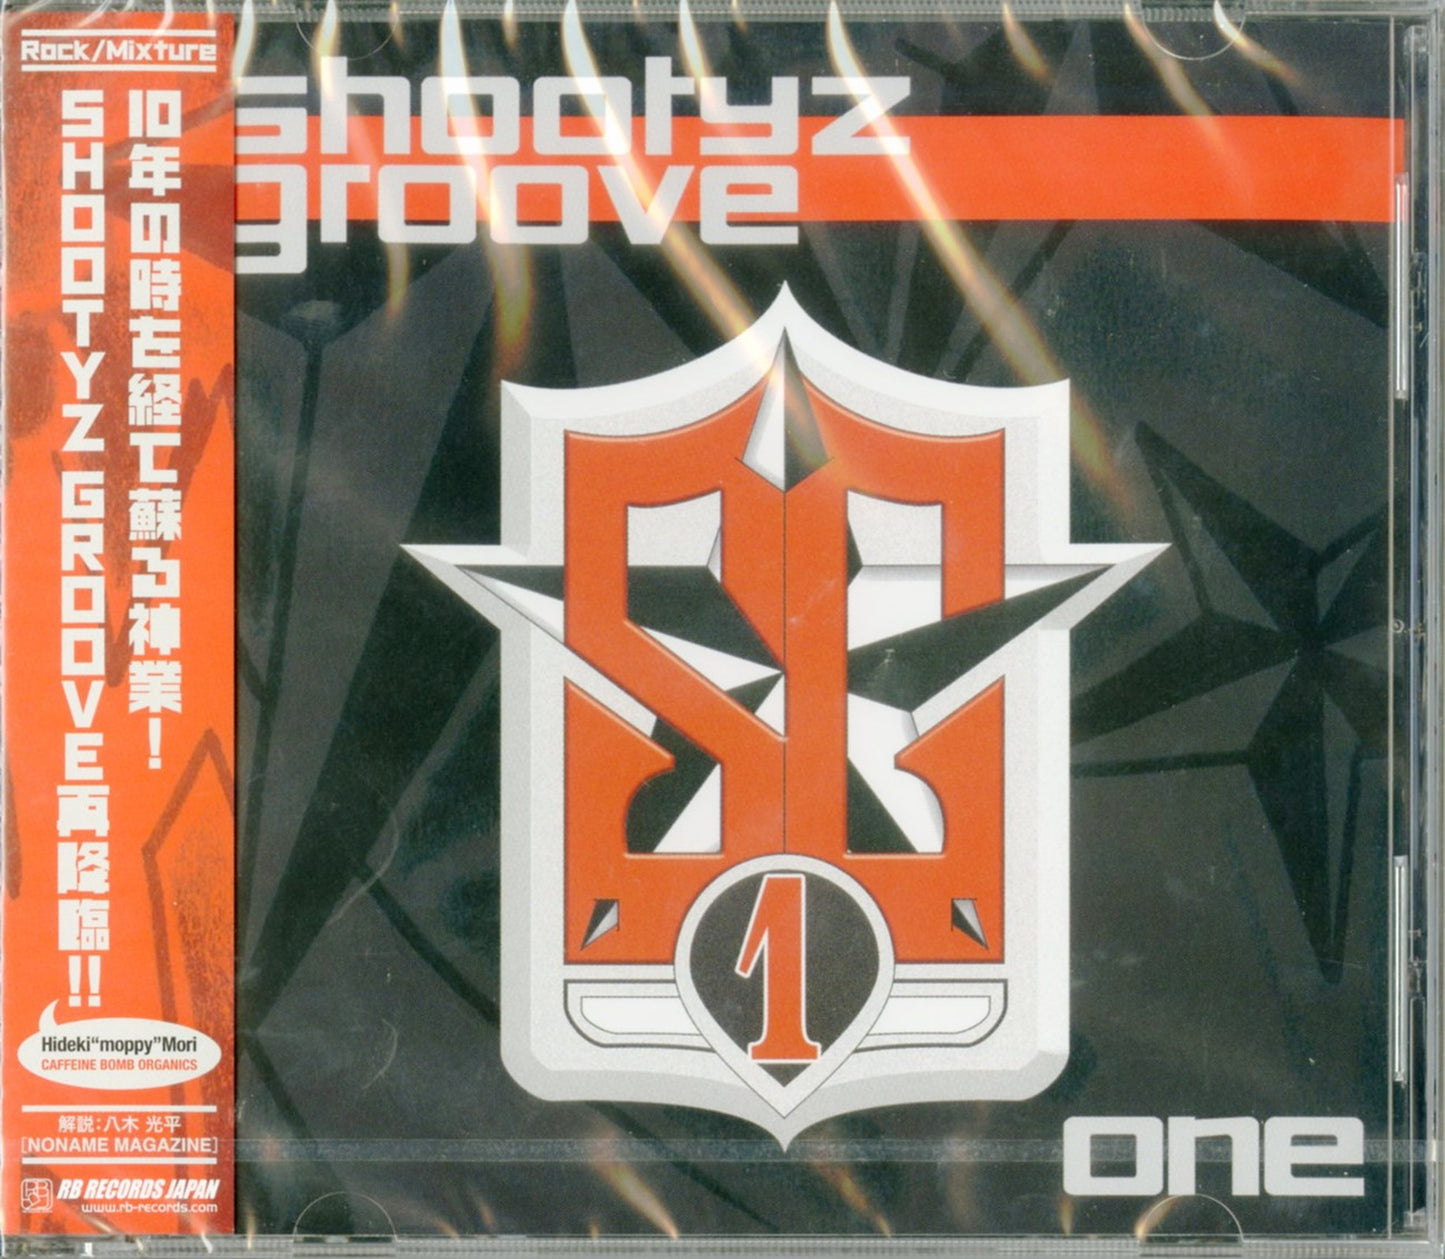 Shootyz Groove - One - Japan CD